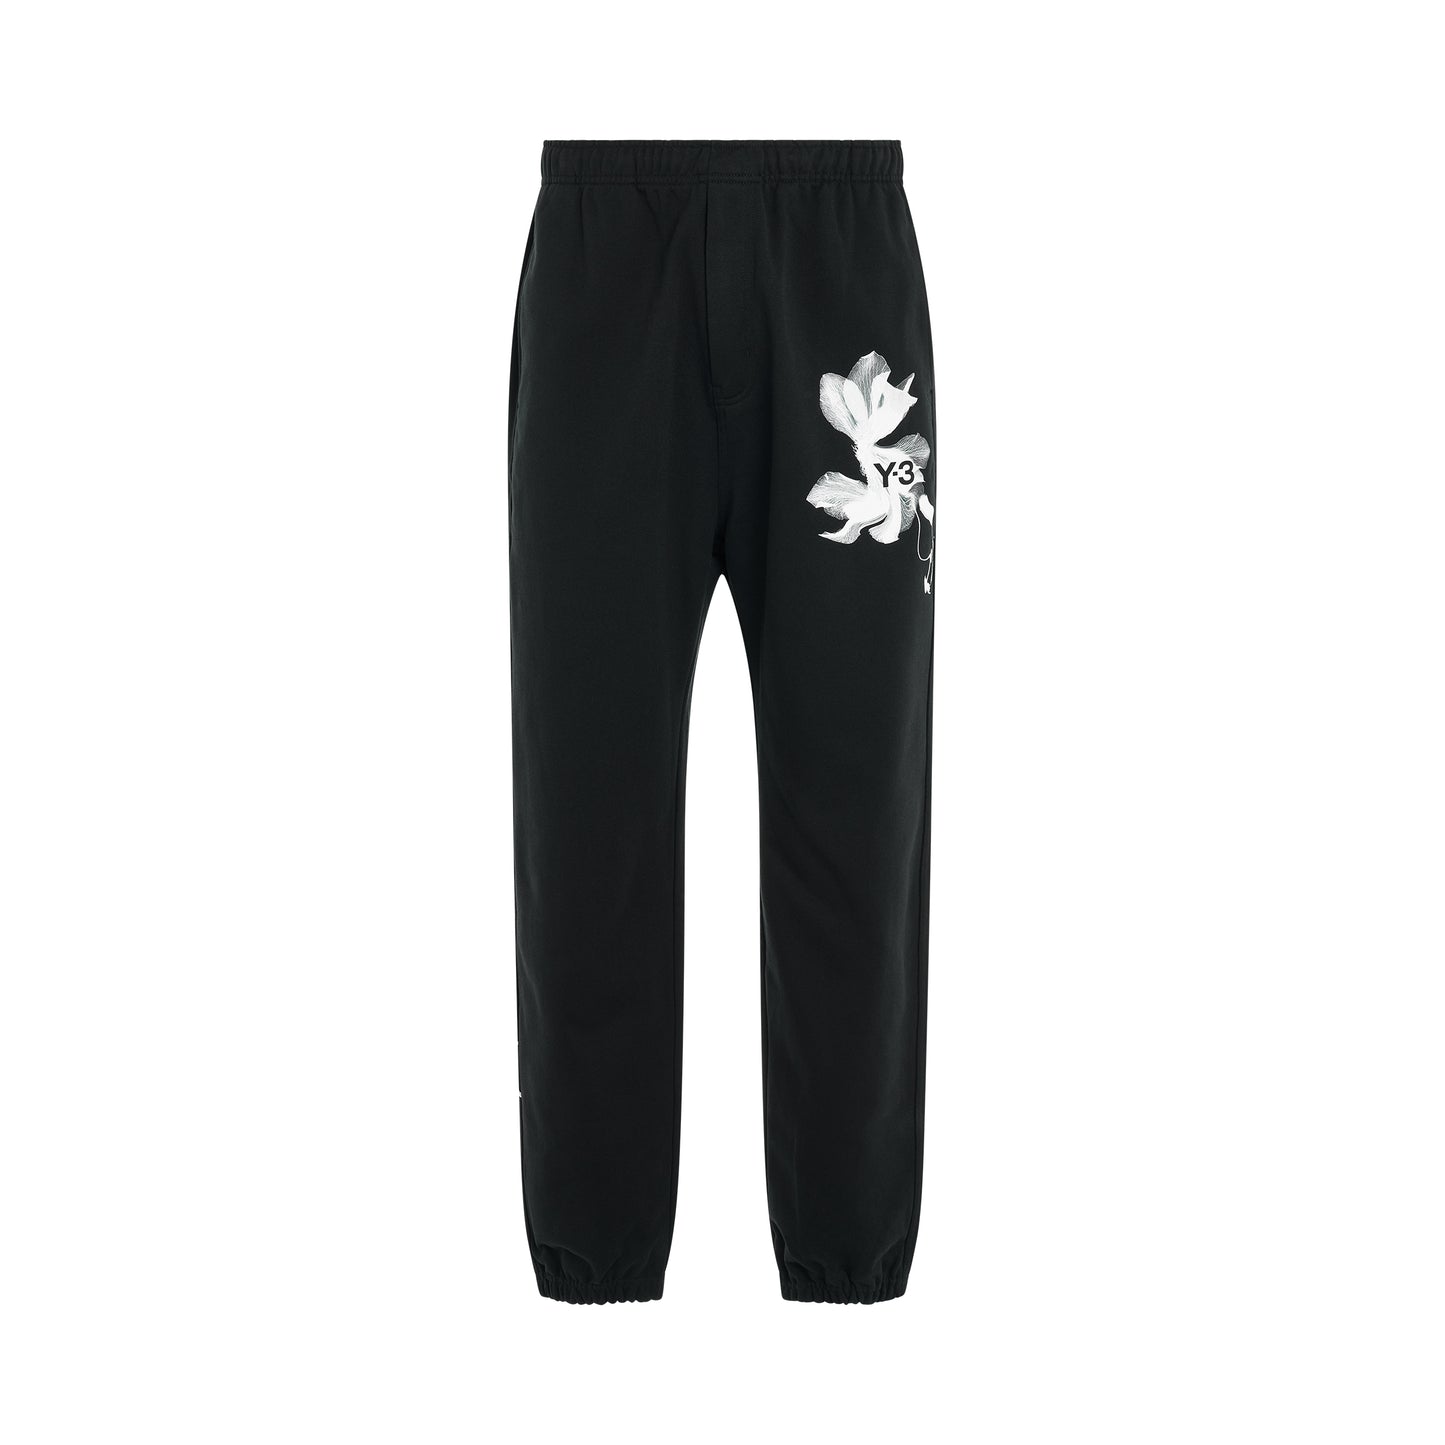 Flower Graphic Sweatpants in Black